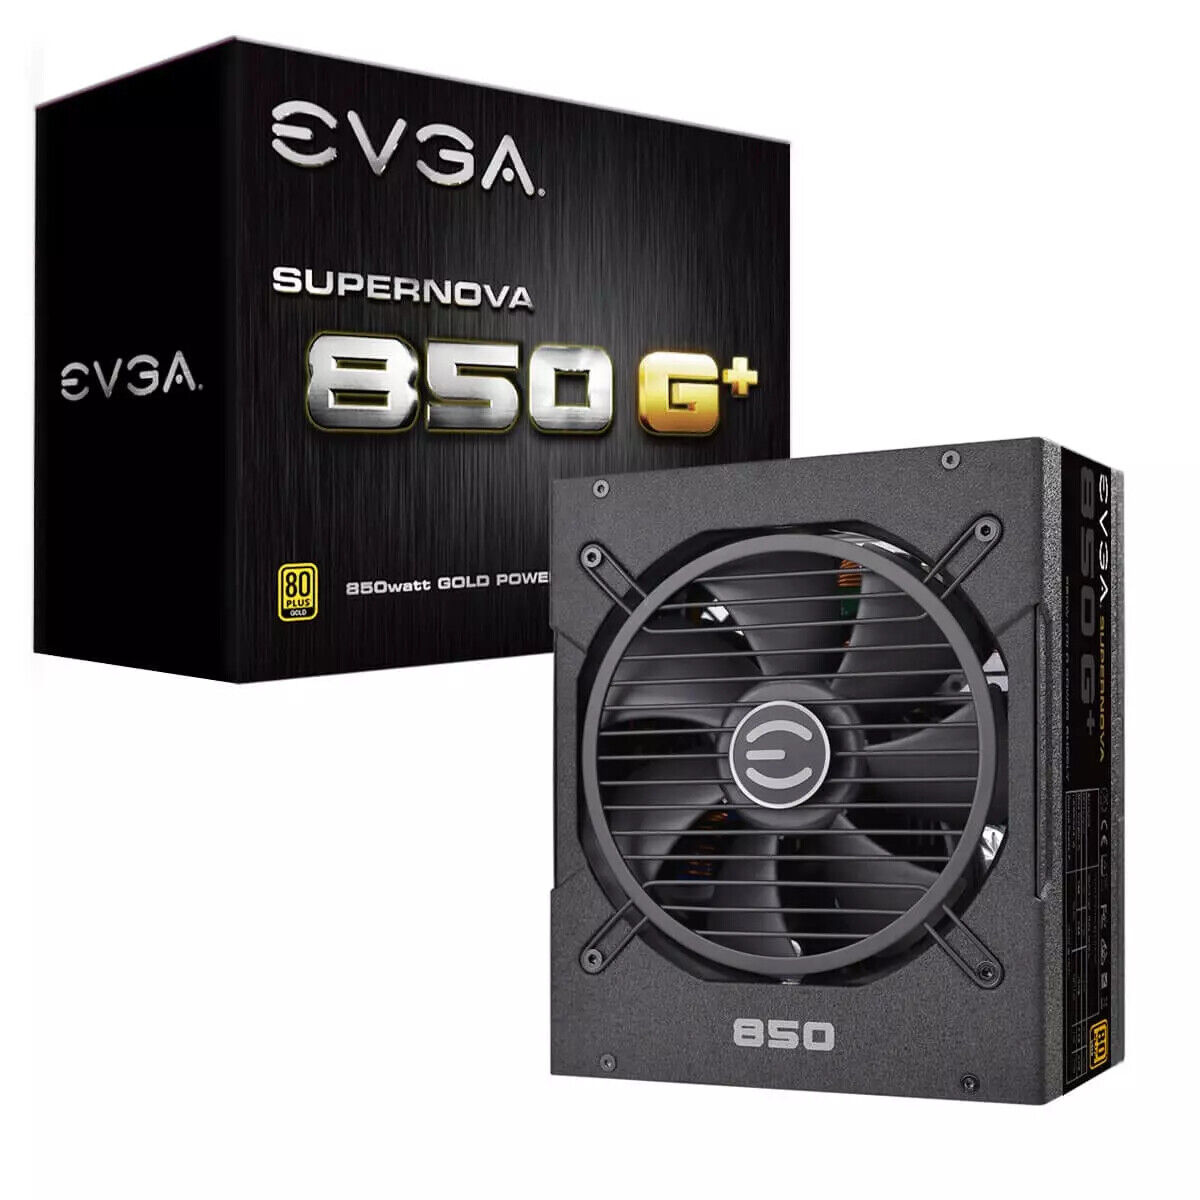 SHIPS 1/19 - EVGA SuperNOVA 850W G+ 80 Plus Gold Full Modular PSU - SEALED BOX